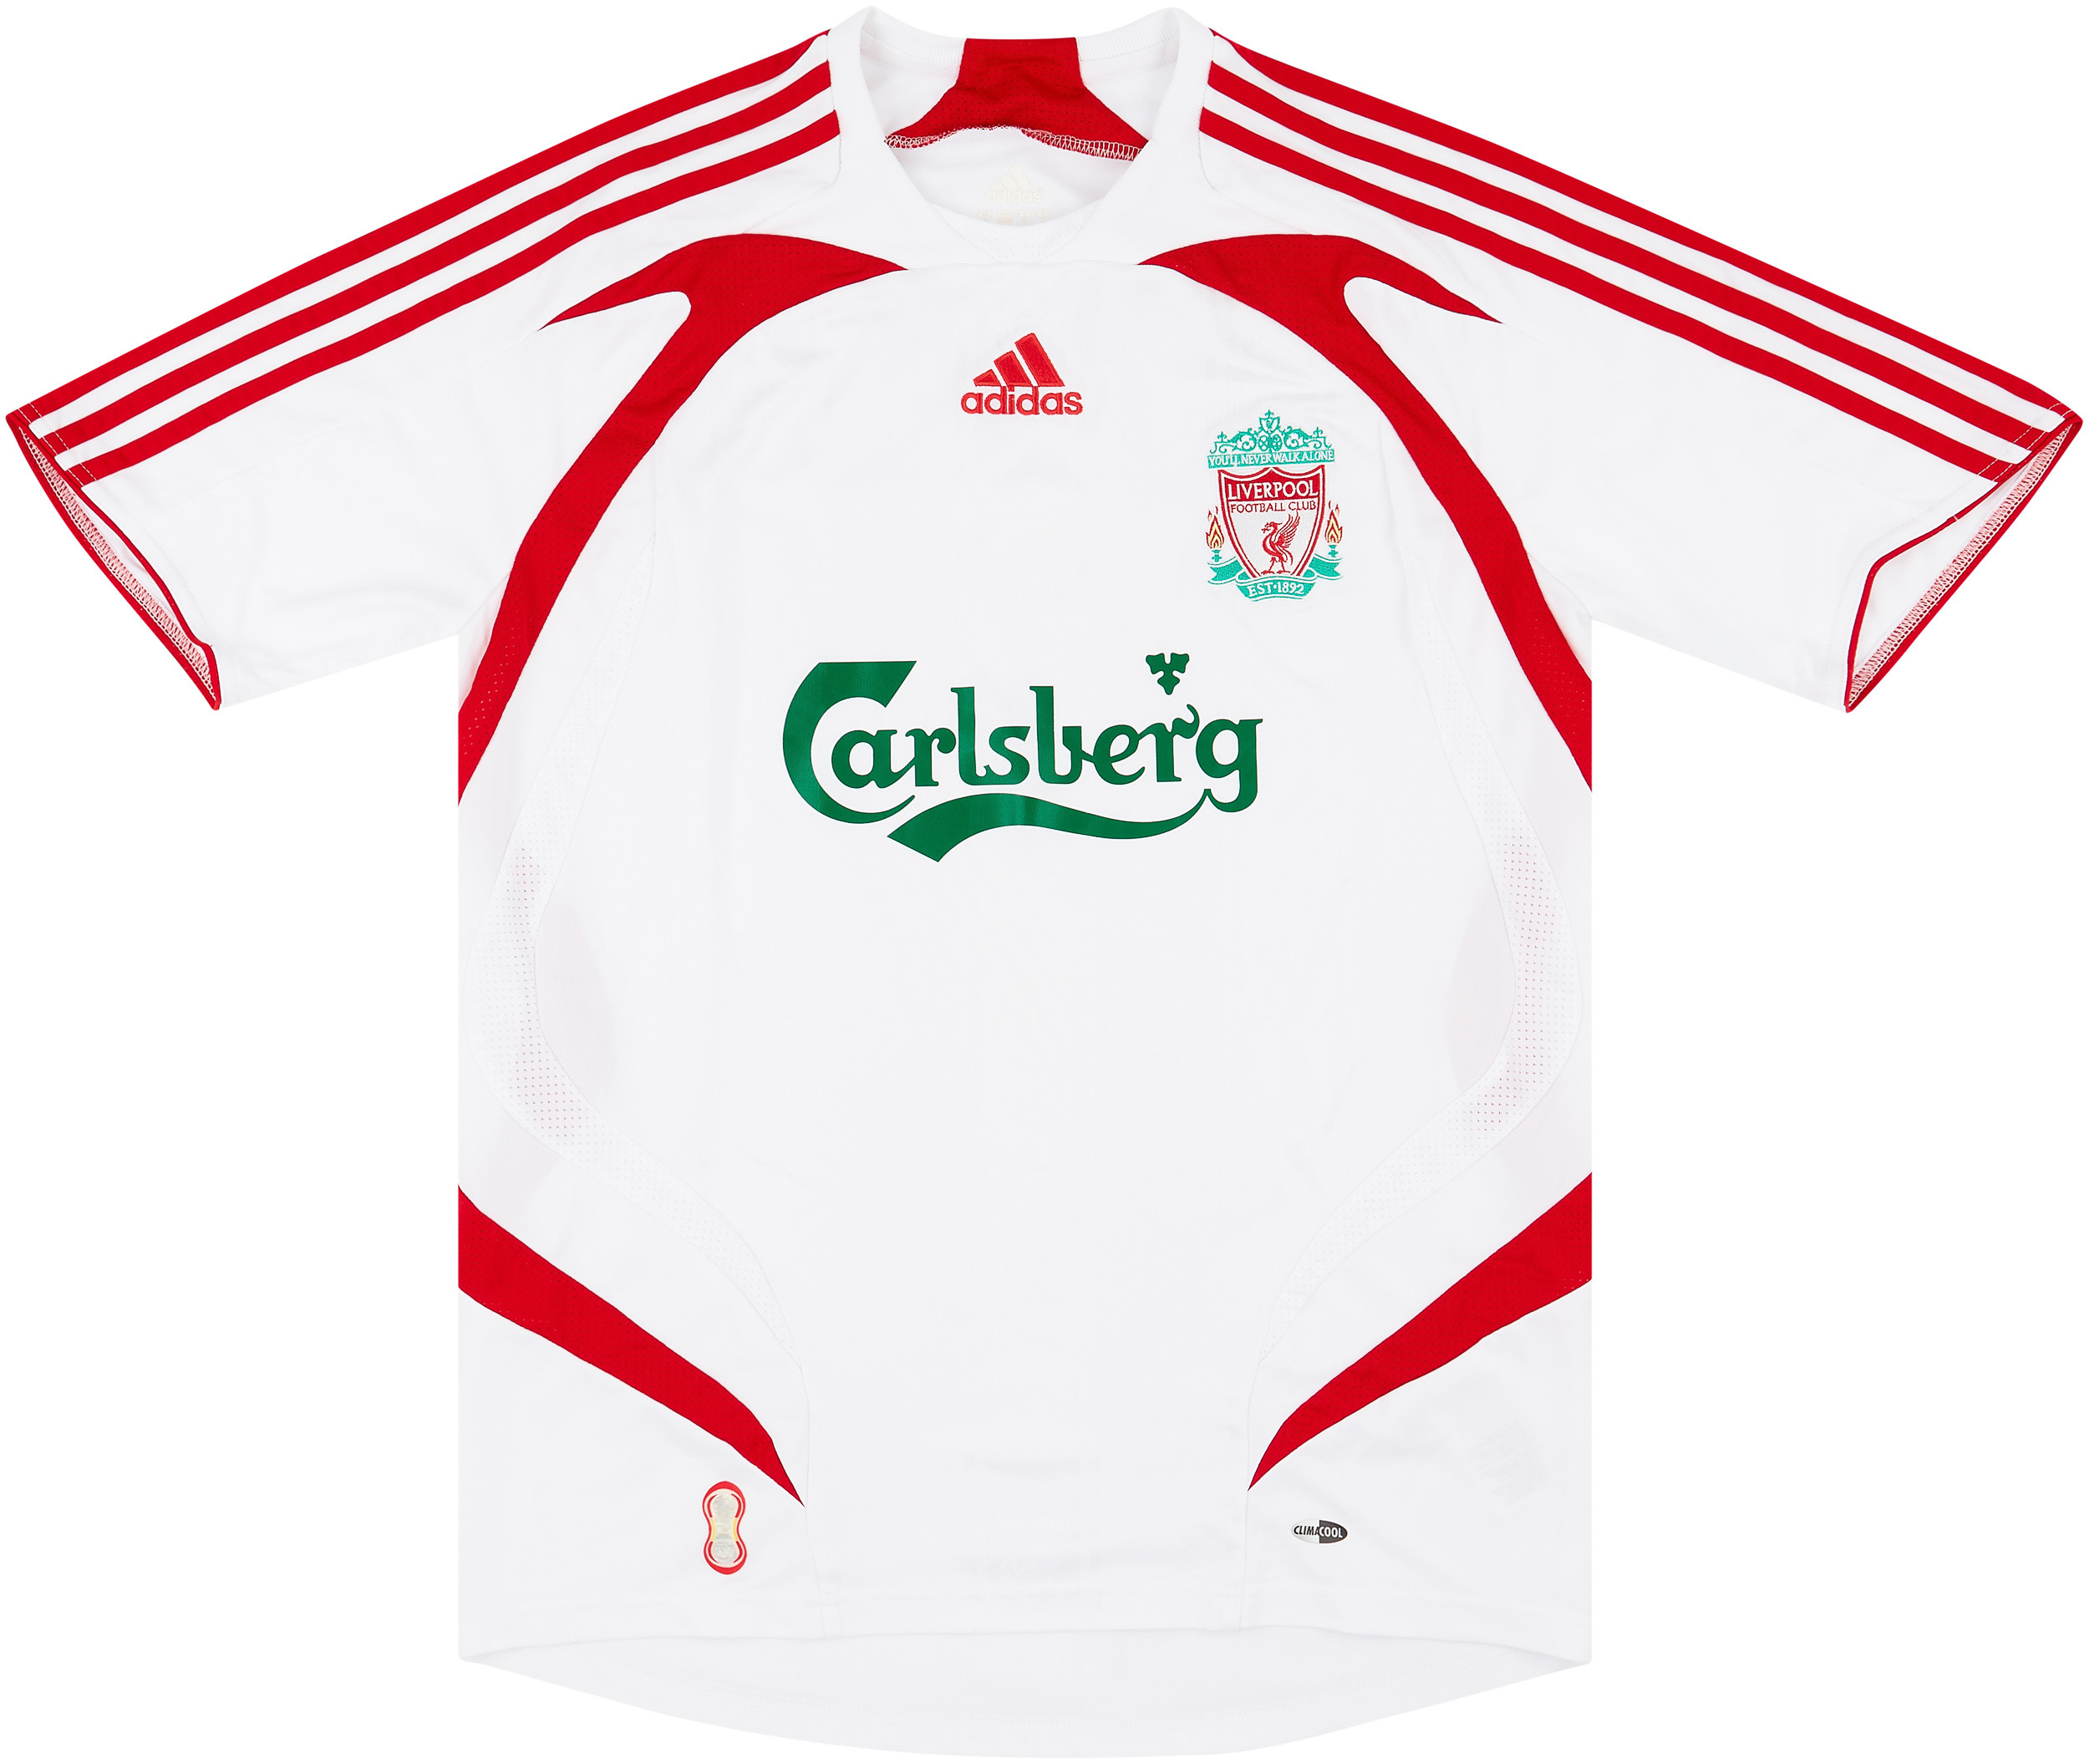 2007-08 Liverpool Away Shirt - 6/10 - ()